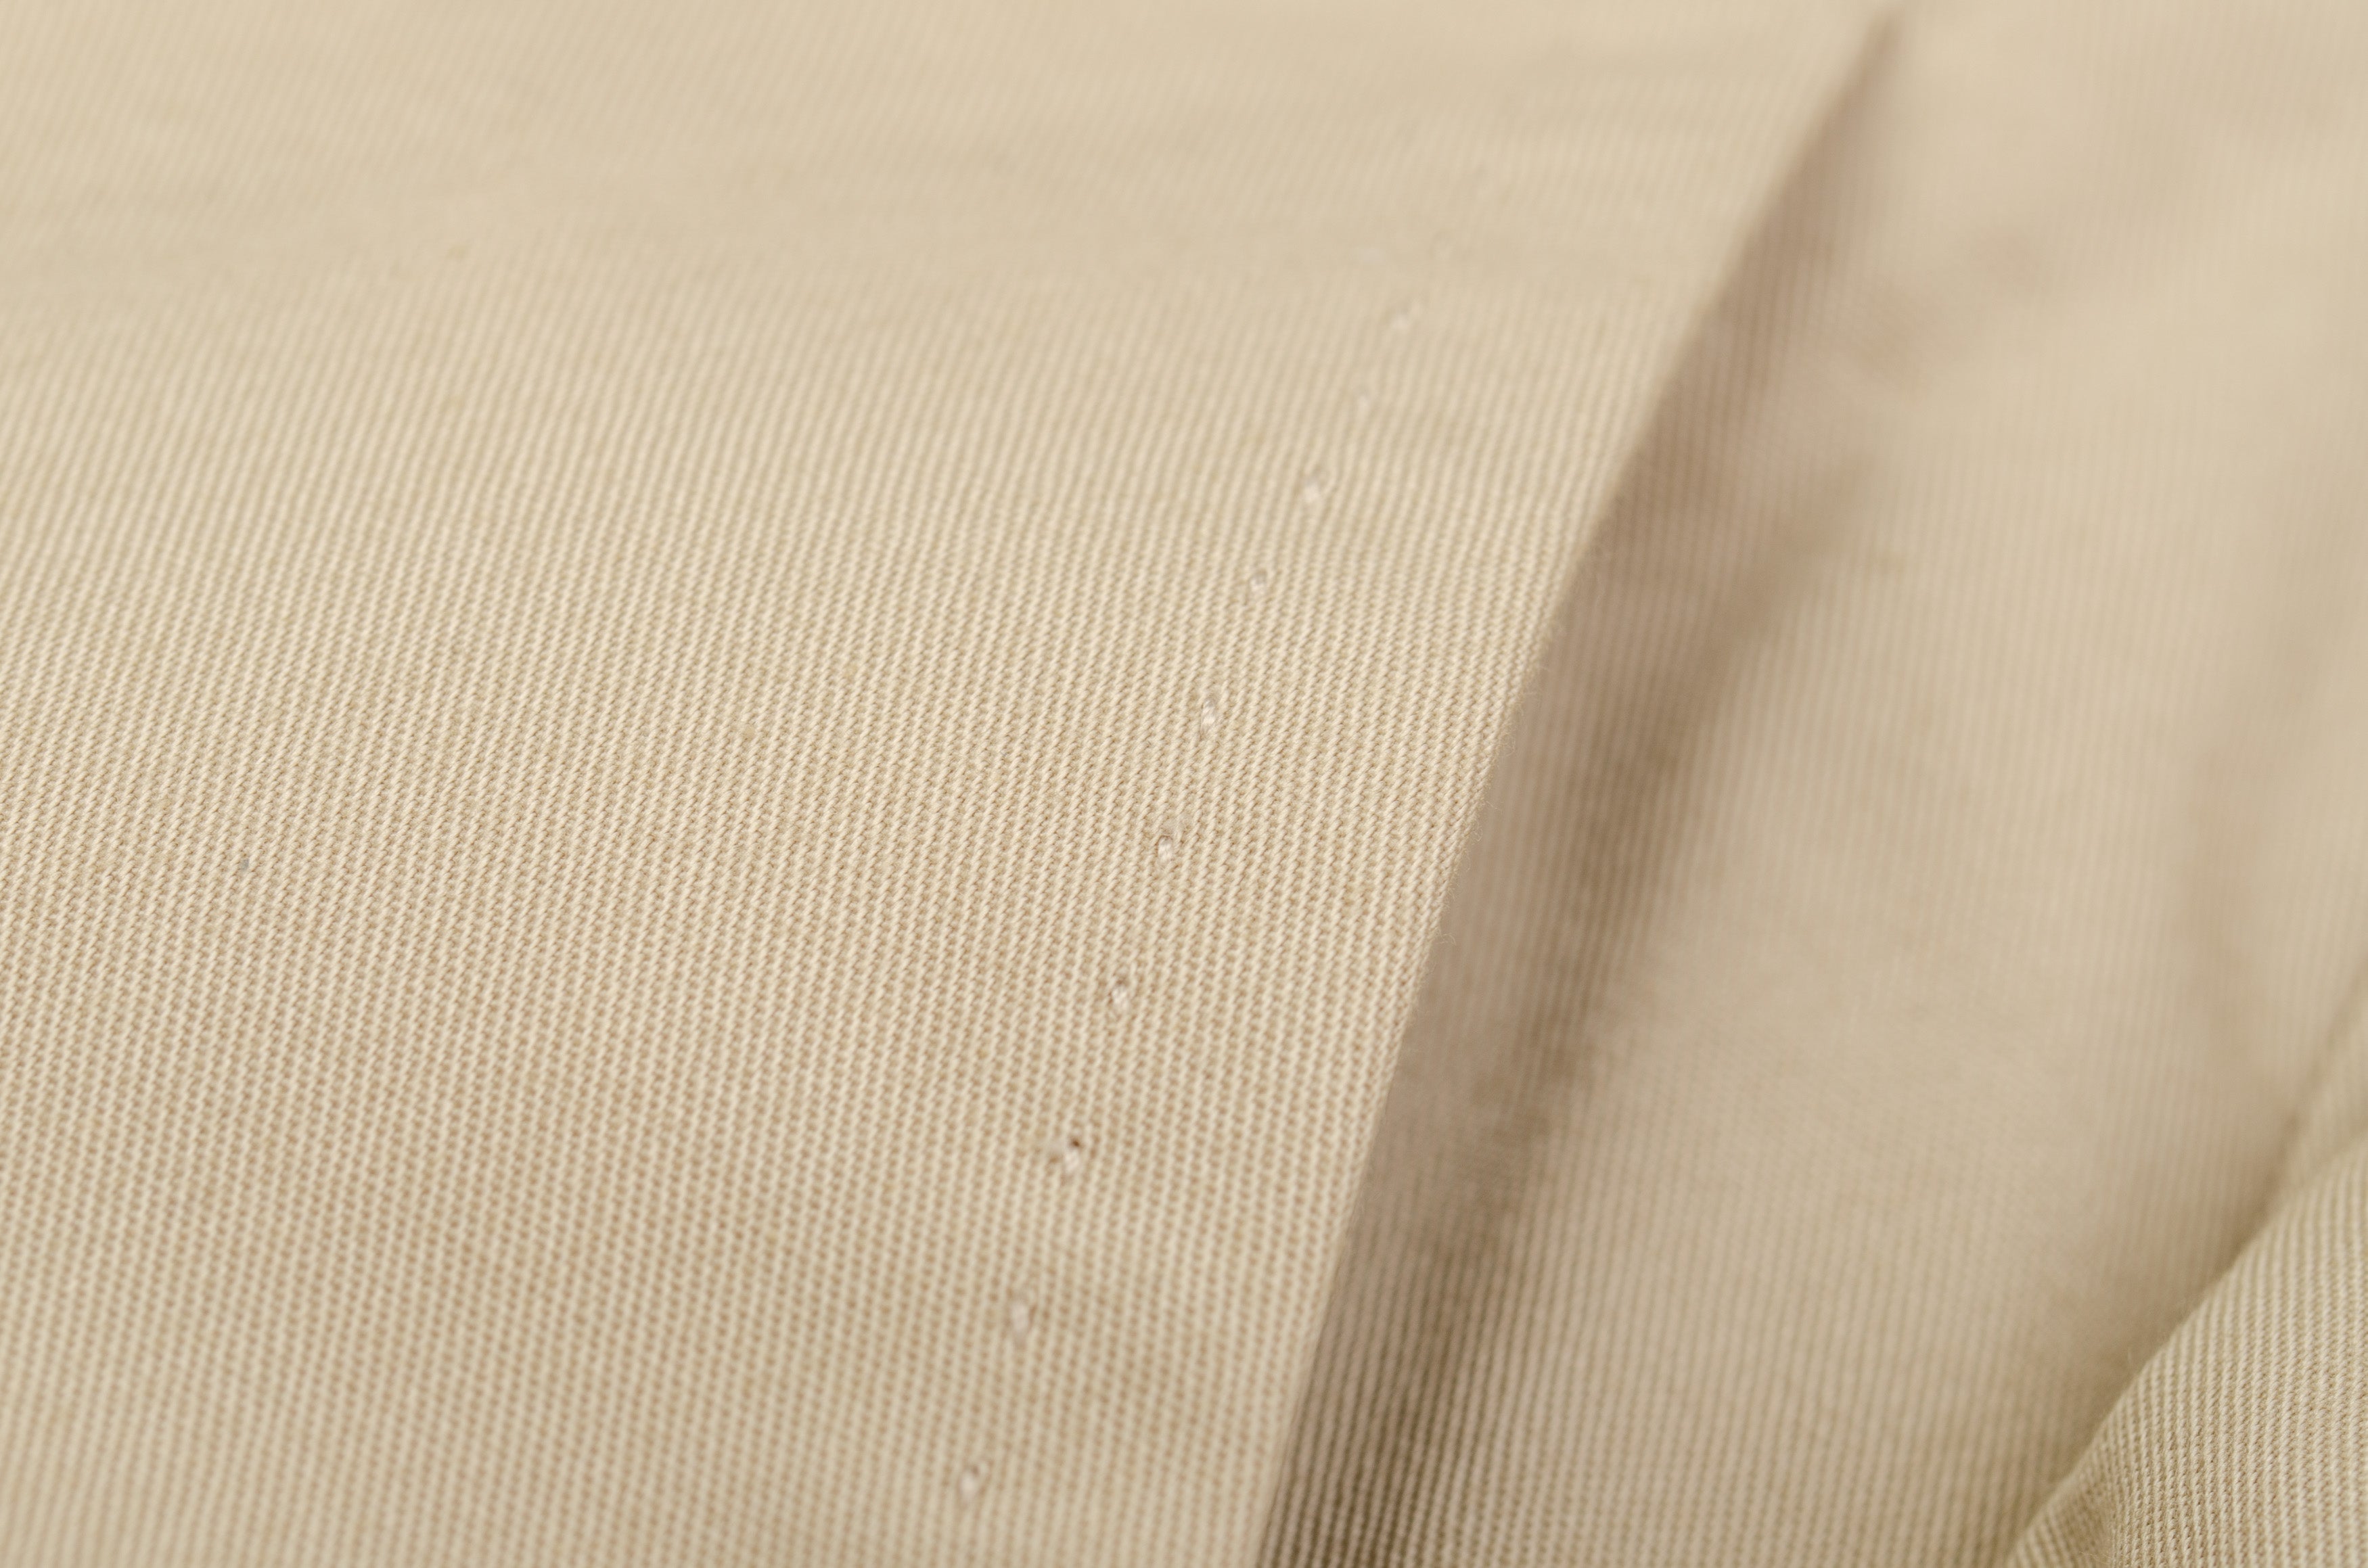 D'AVENZA Handmade Beige Cotton Flat Front Dress Pants 56 NEW US 40 Regular Fit D'AVENZA